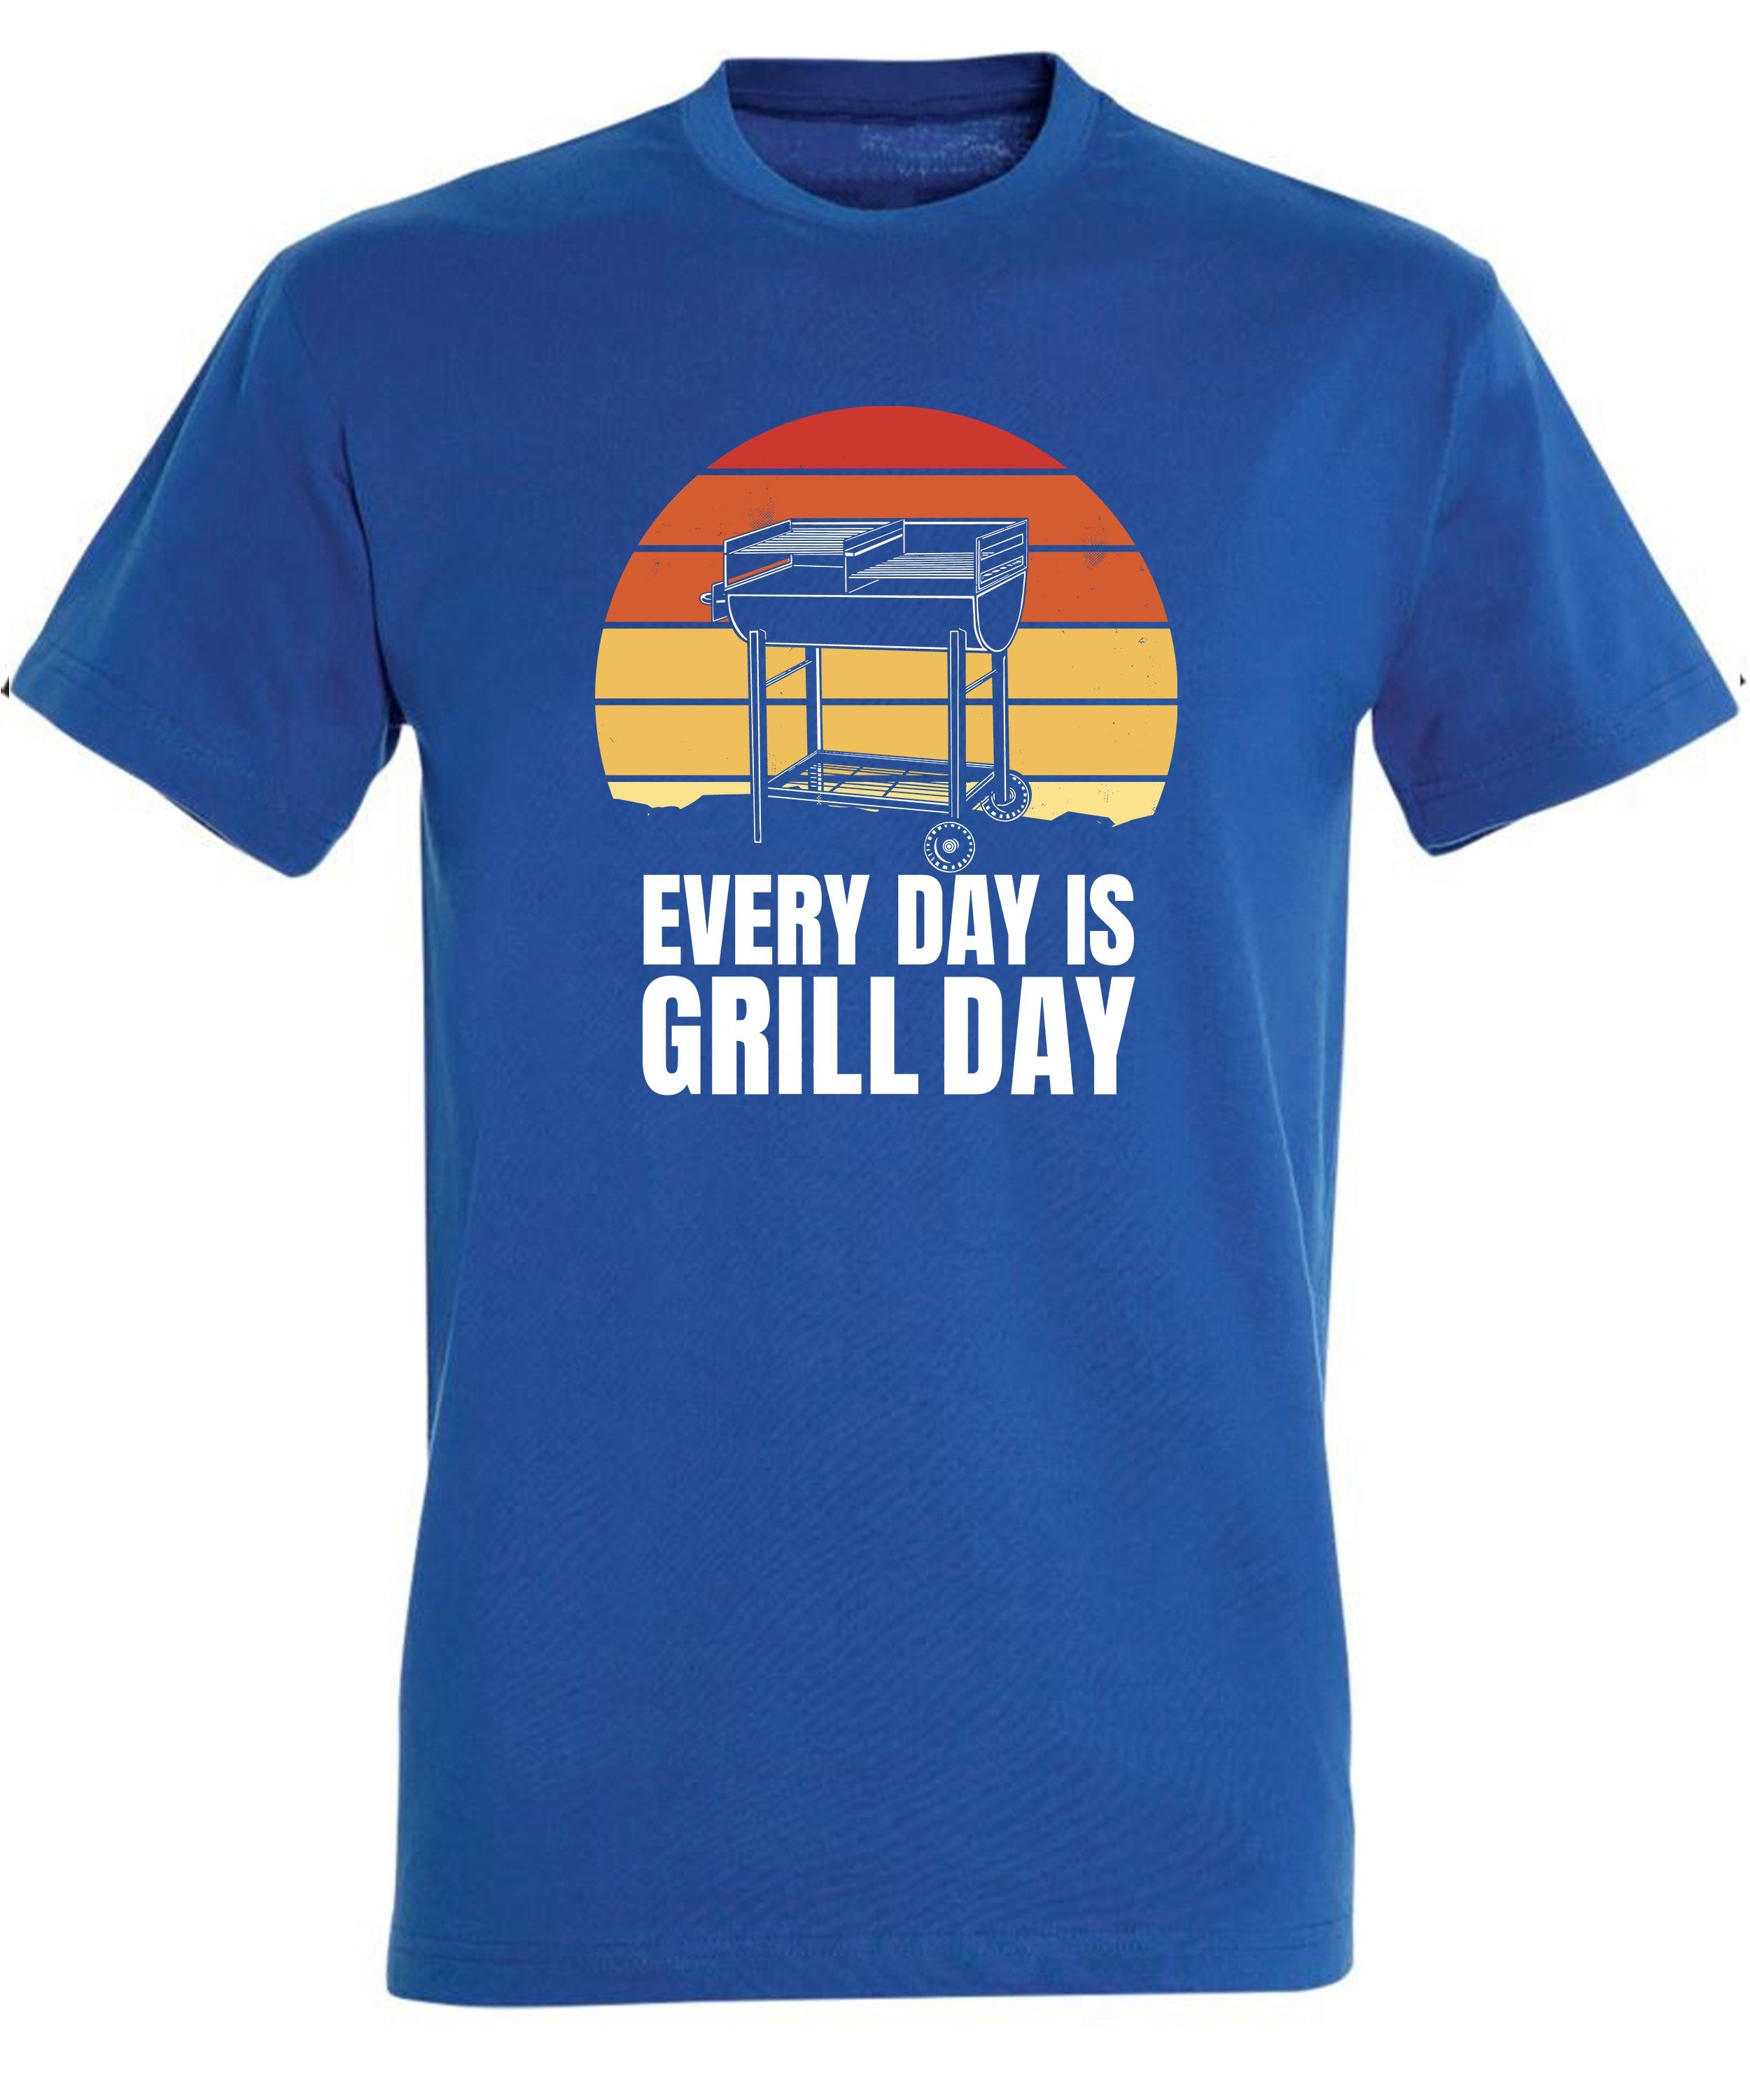 Retro Day mit a royal MyDesign24 - T-Shirt Grill Aufdruck Day Every Shirt Print BBQ is T-Shirt Regular Baumwollshirt Grill Herren blau i300 Fit,